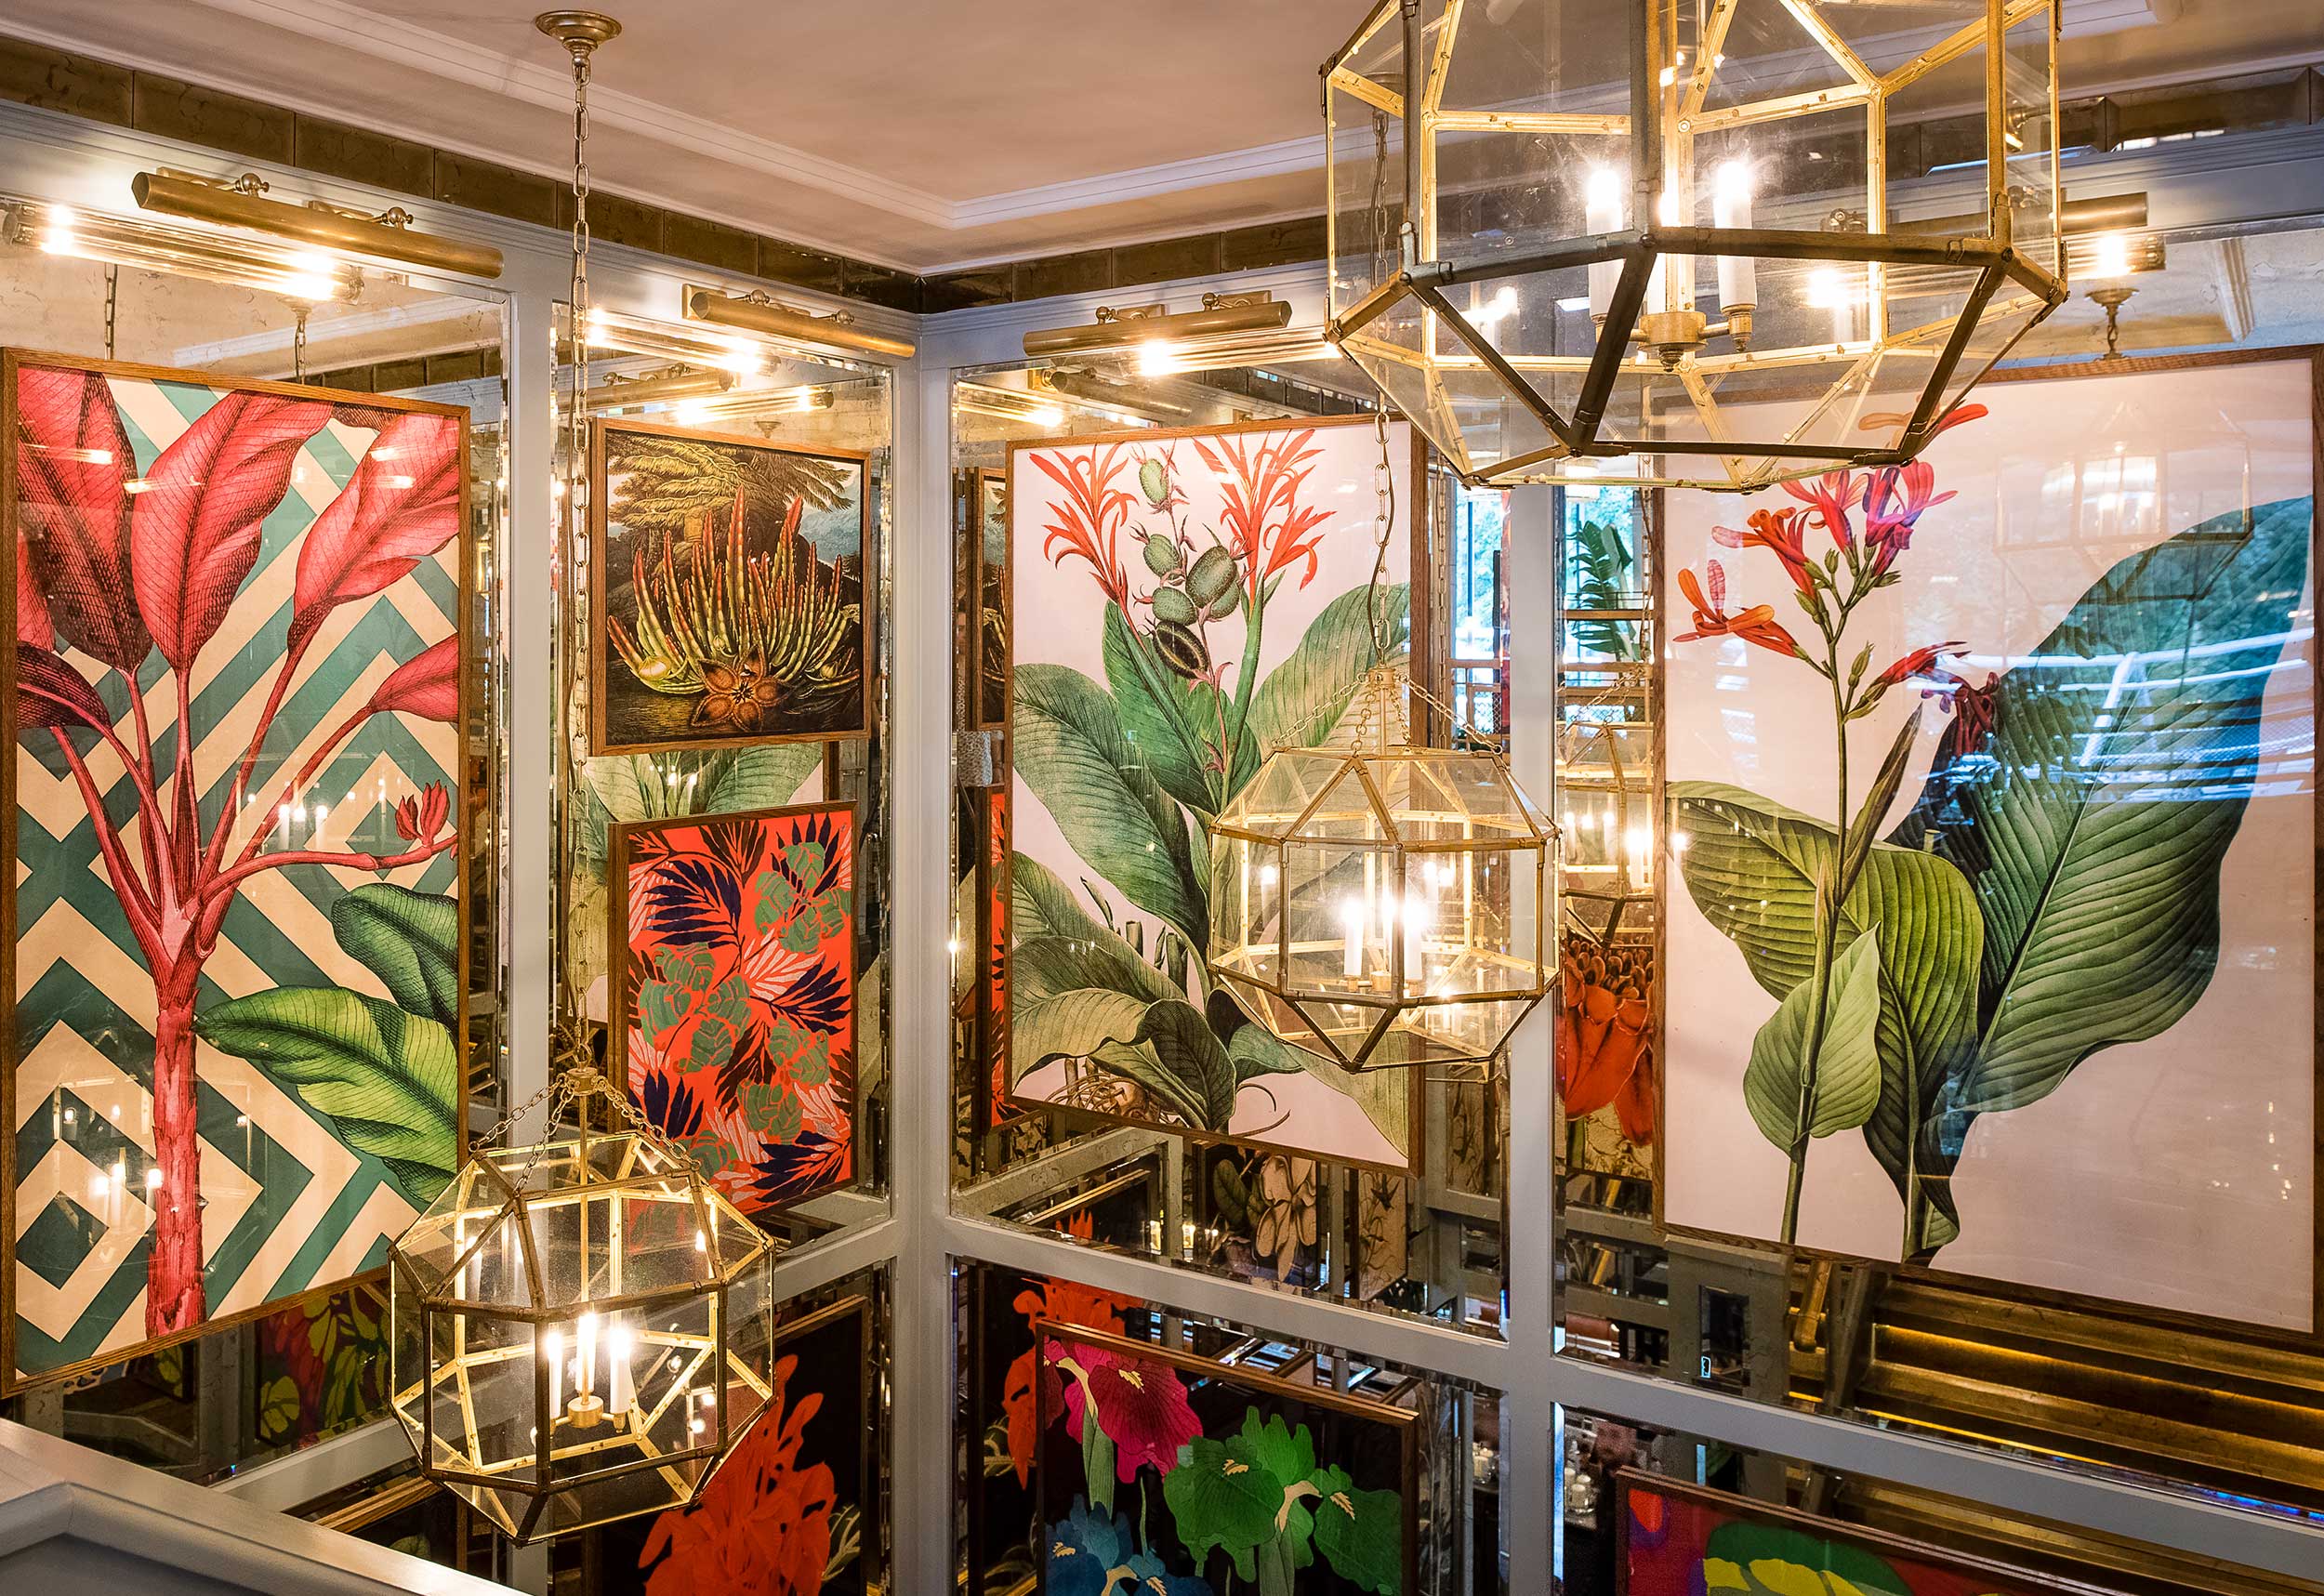 adam ellis studio design london ivy canary wharf park hoarding artwork restaurant stairs mirror framed